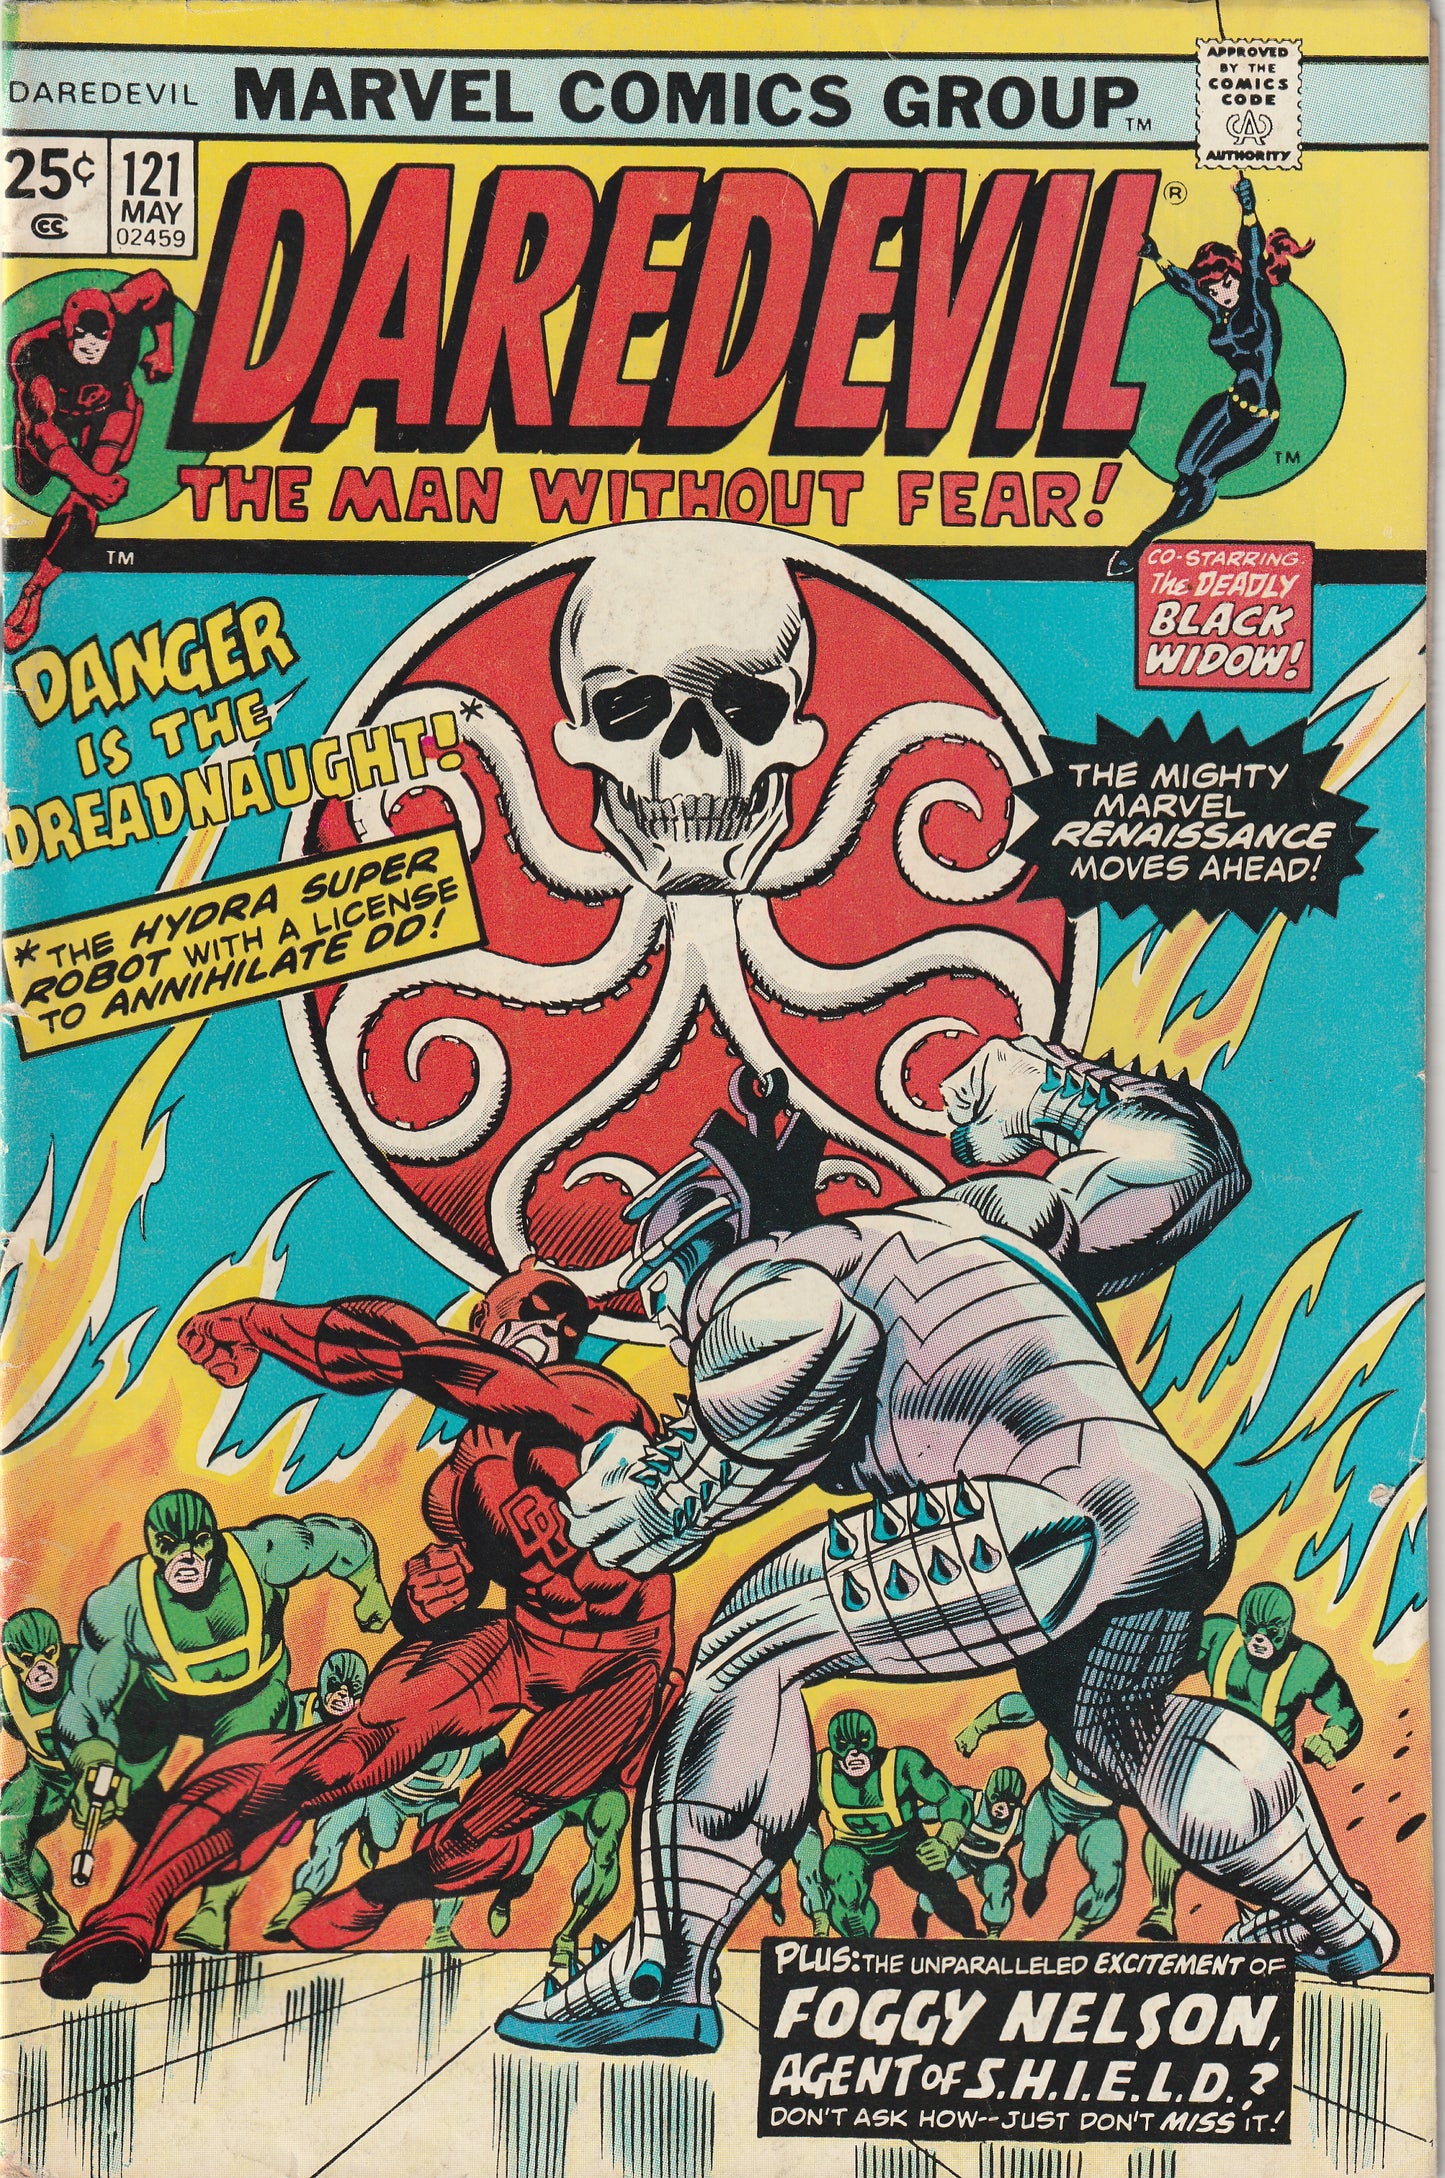 Daredevil #121 (1975) - 1st Appearance of Jackhammer (partial)